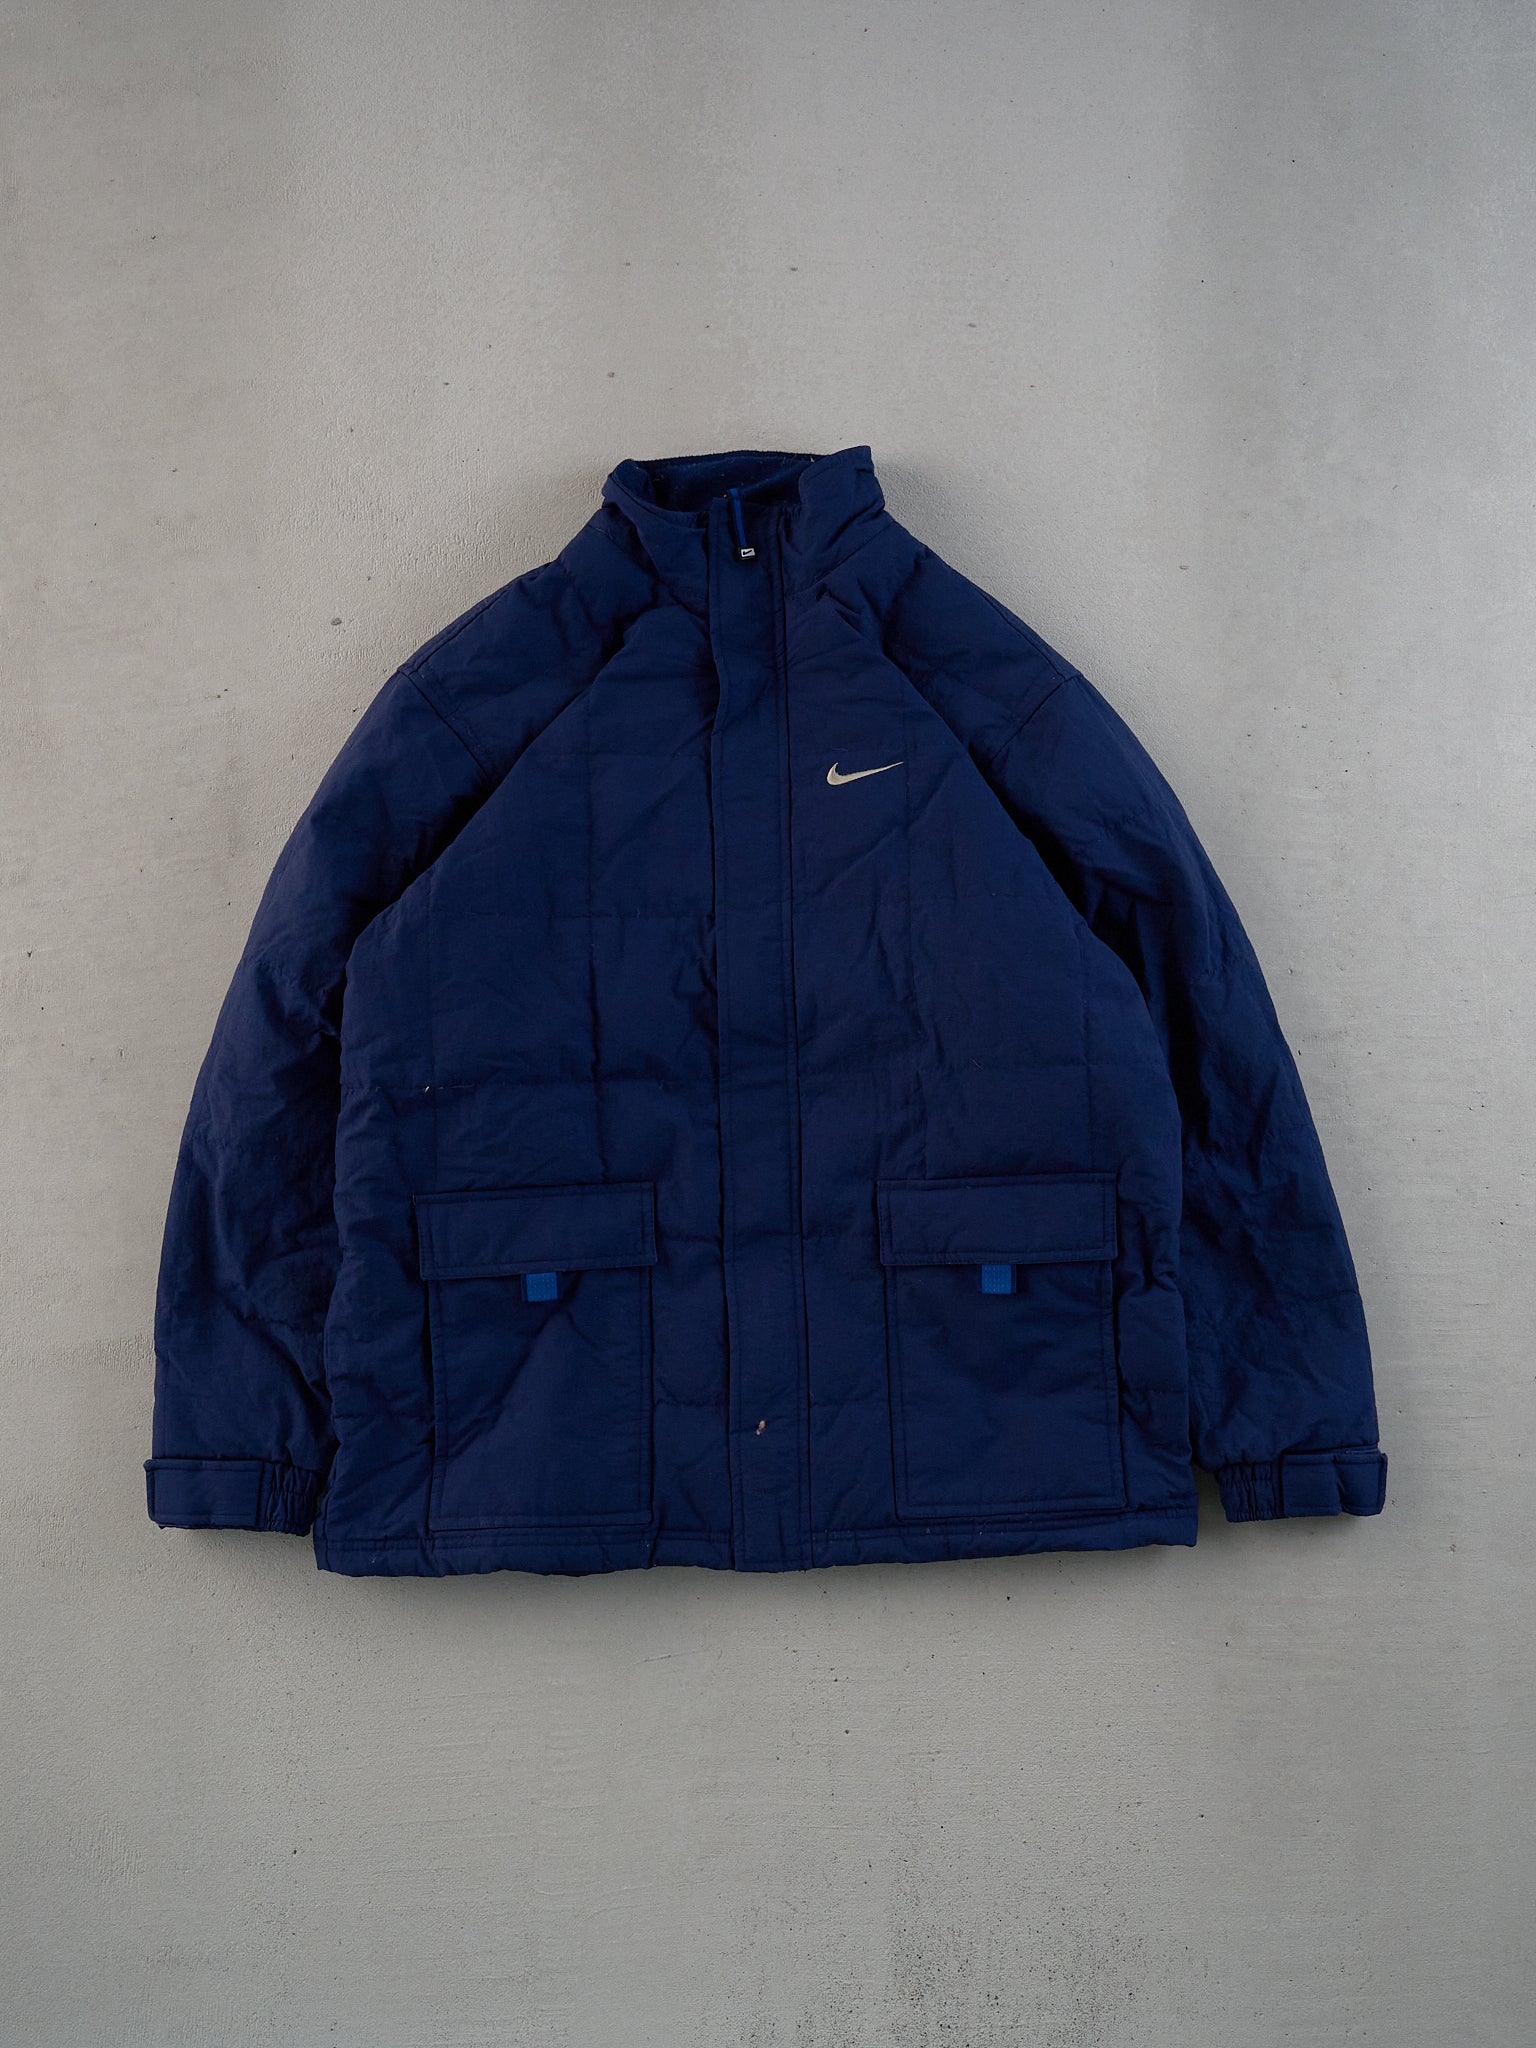 Vintage Y2k Navy Blue Nike Puffer Jacket (L)